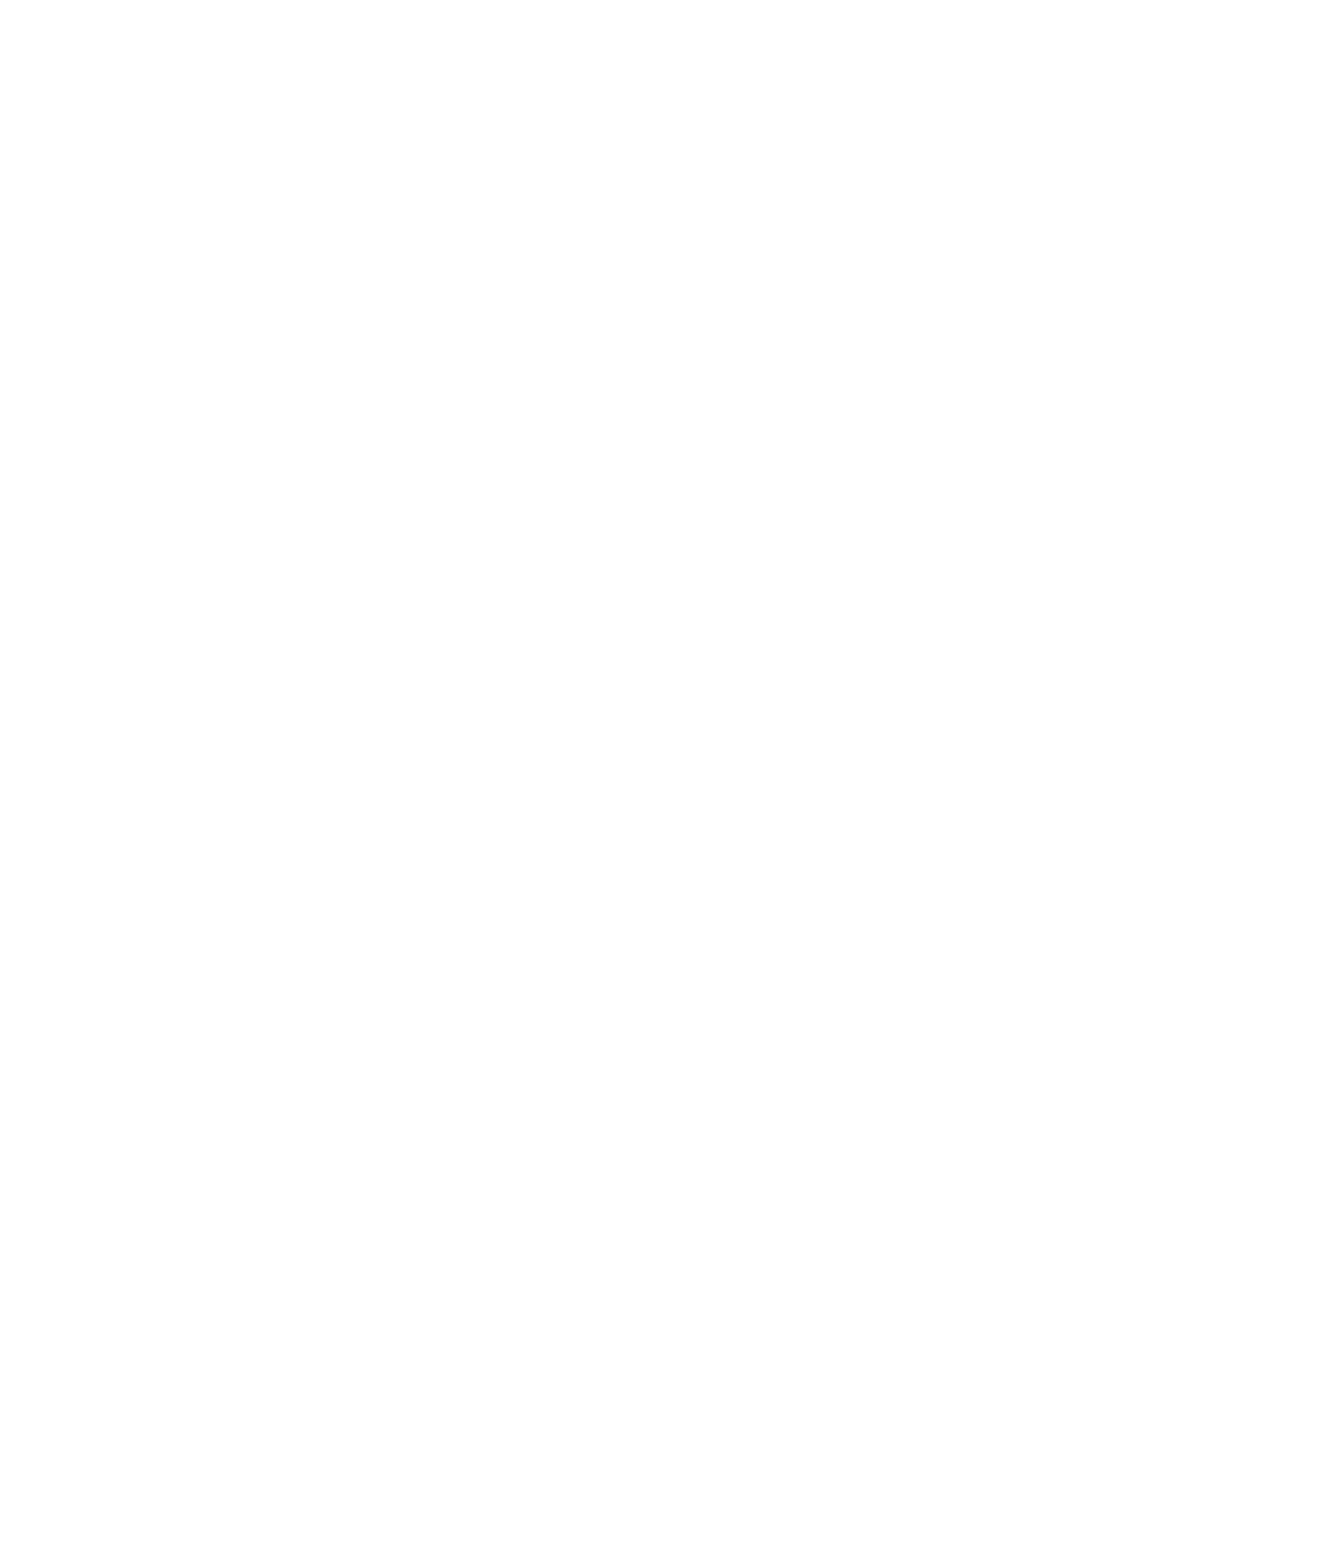 Gatos Silver logo for dark backgrounds (transparent PNG)